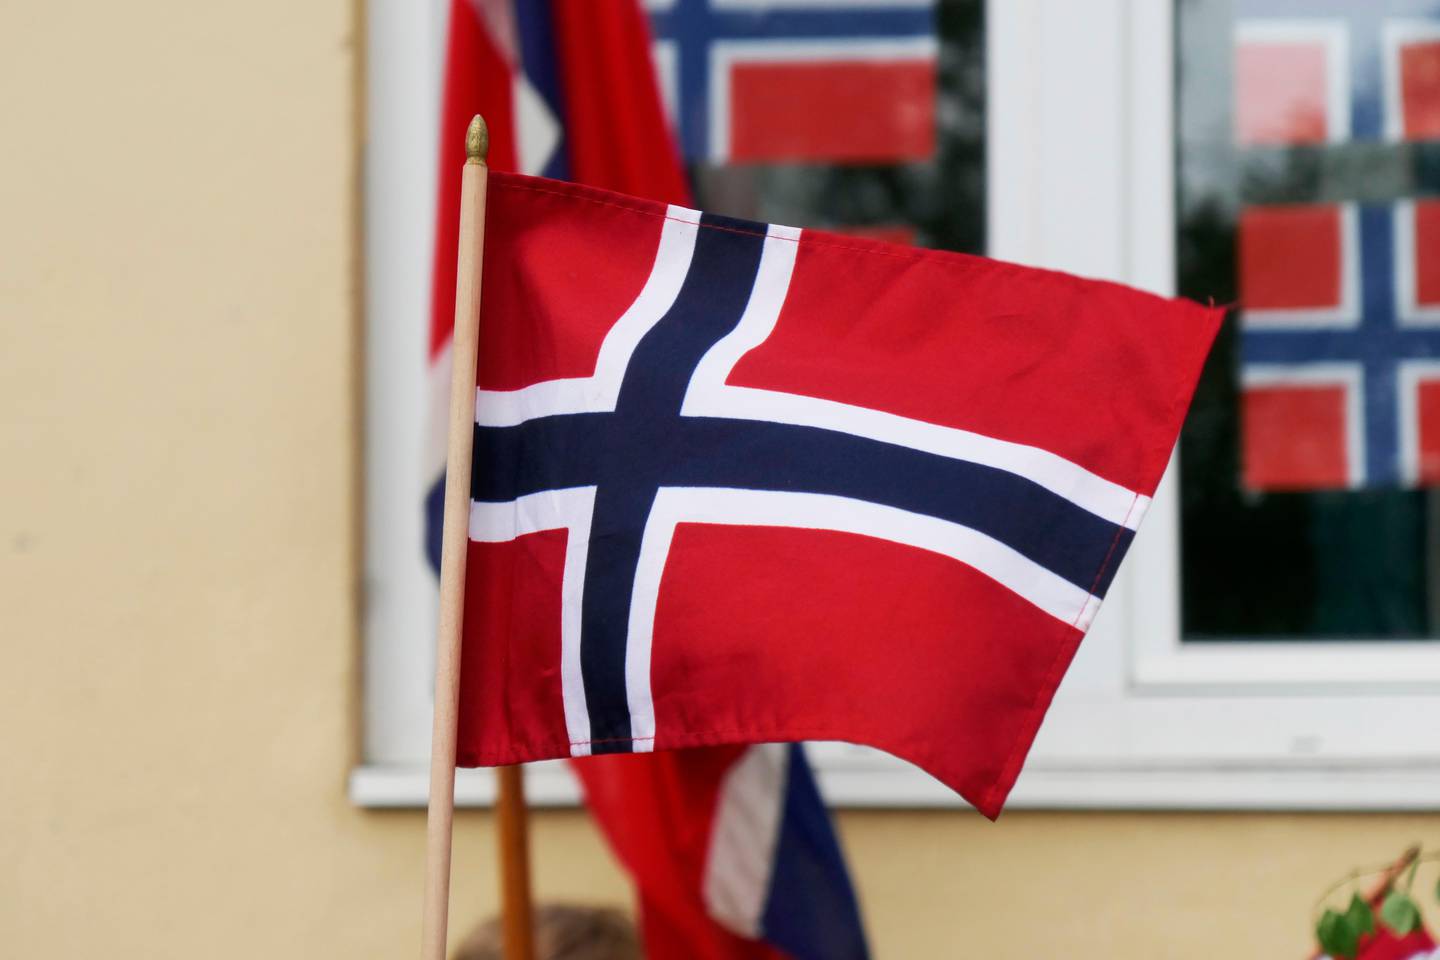 Oslo  20180517.
17.mai flagg på nasjonaldagen 17.mai.
Foto: Erik Johansen / NTB scanpix